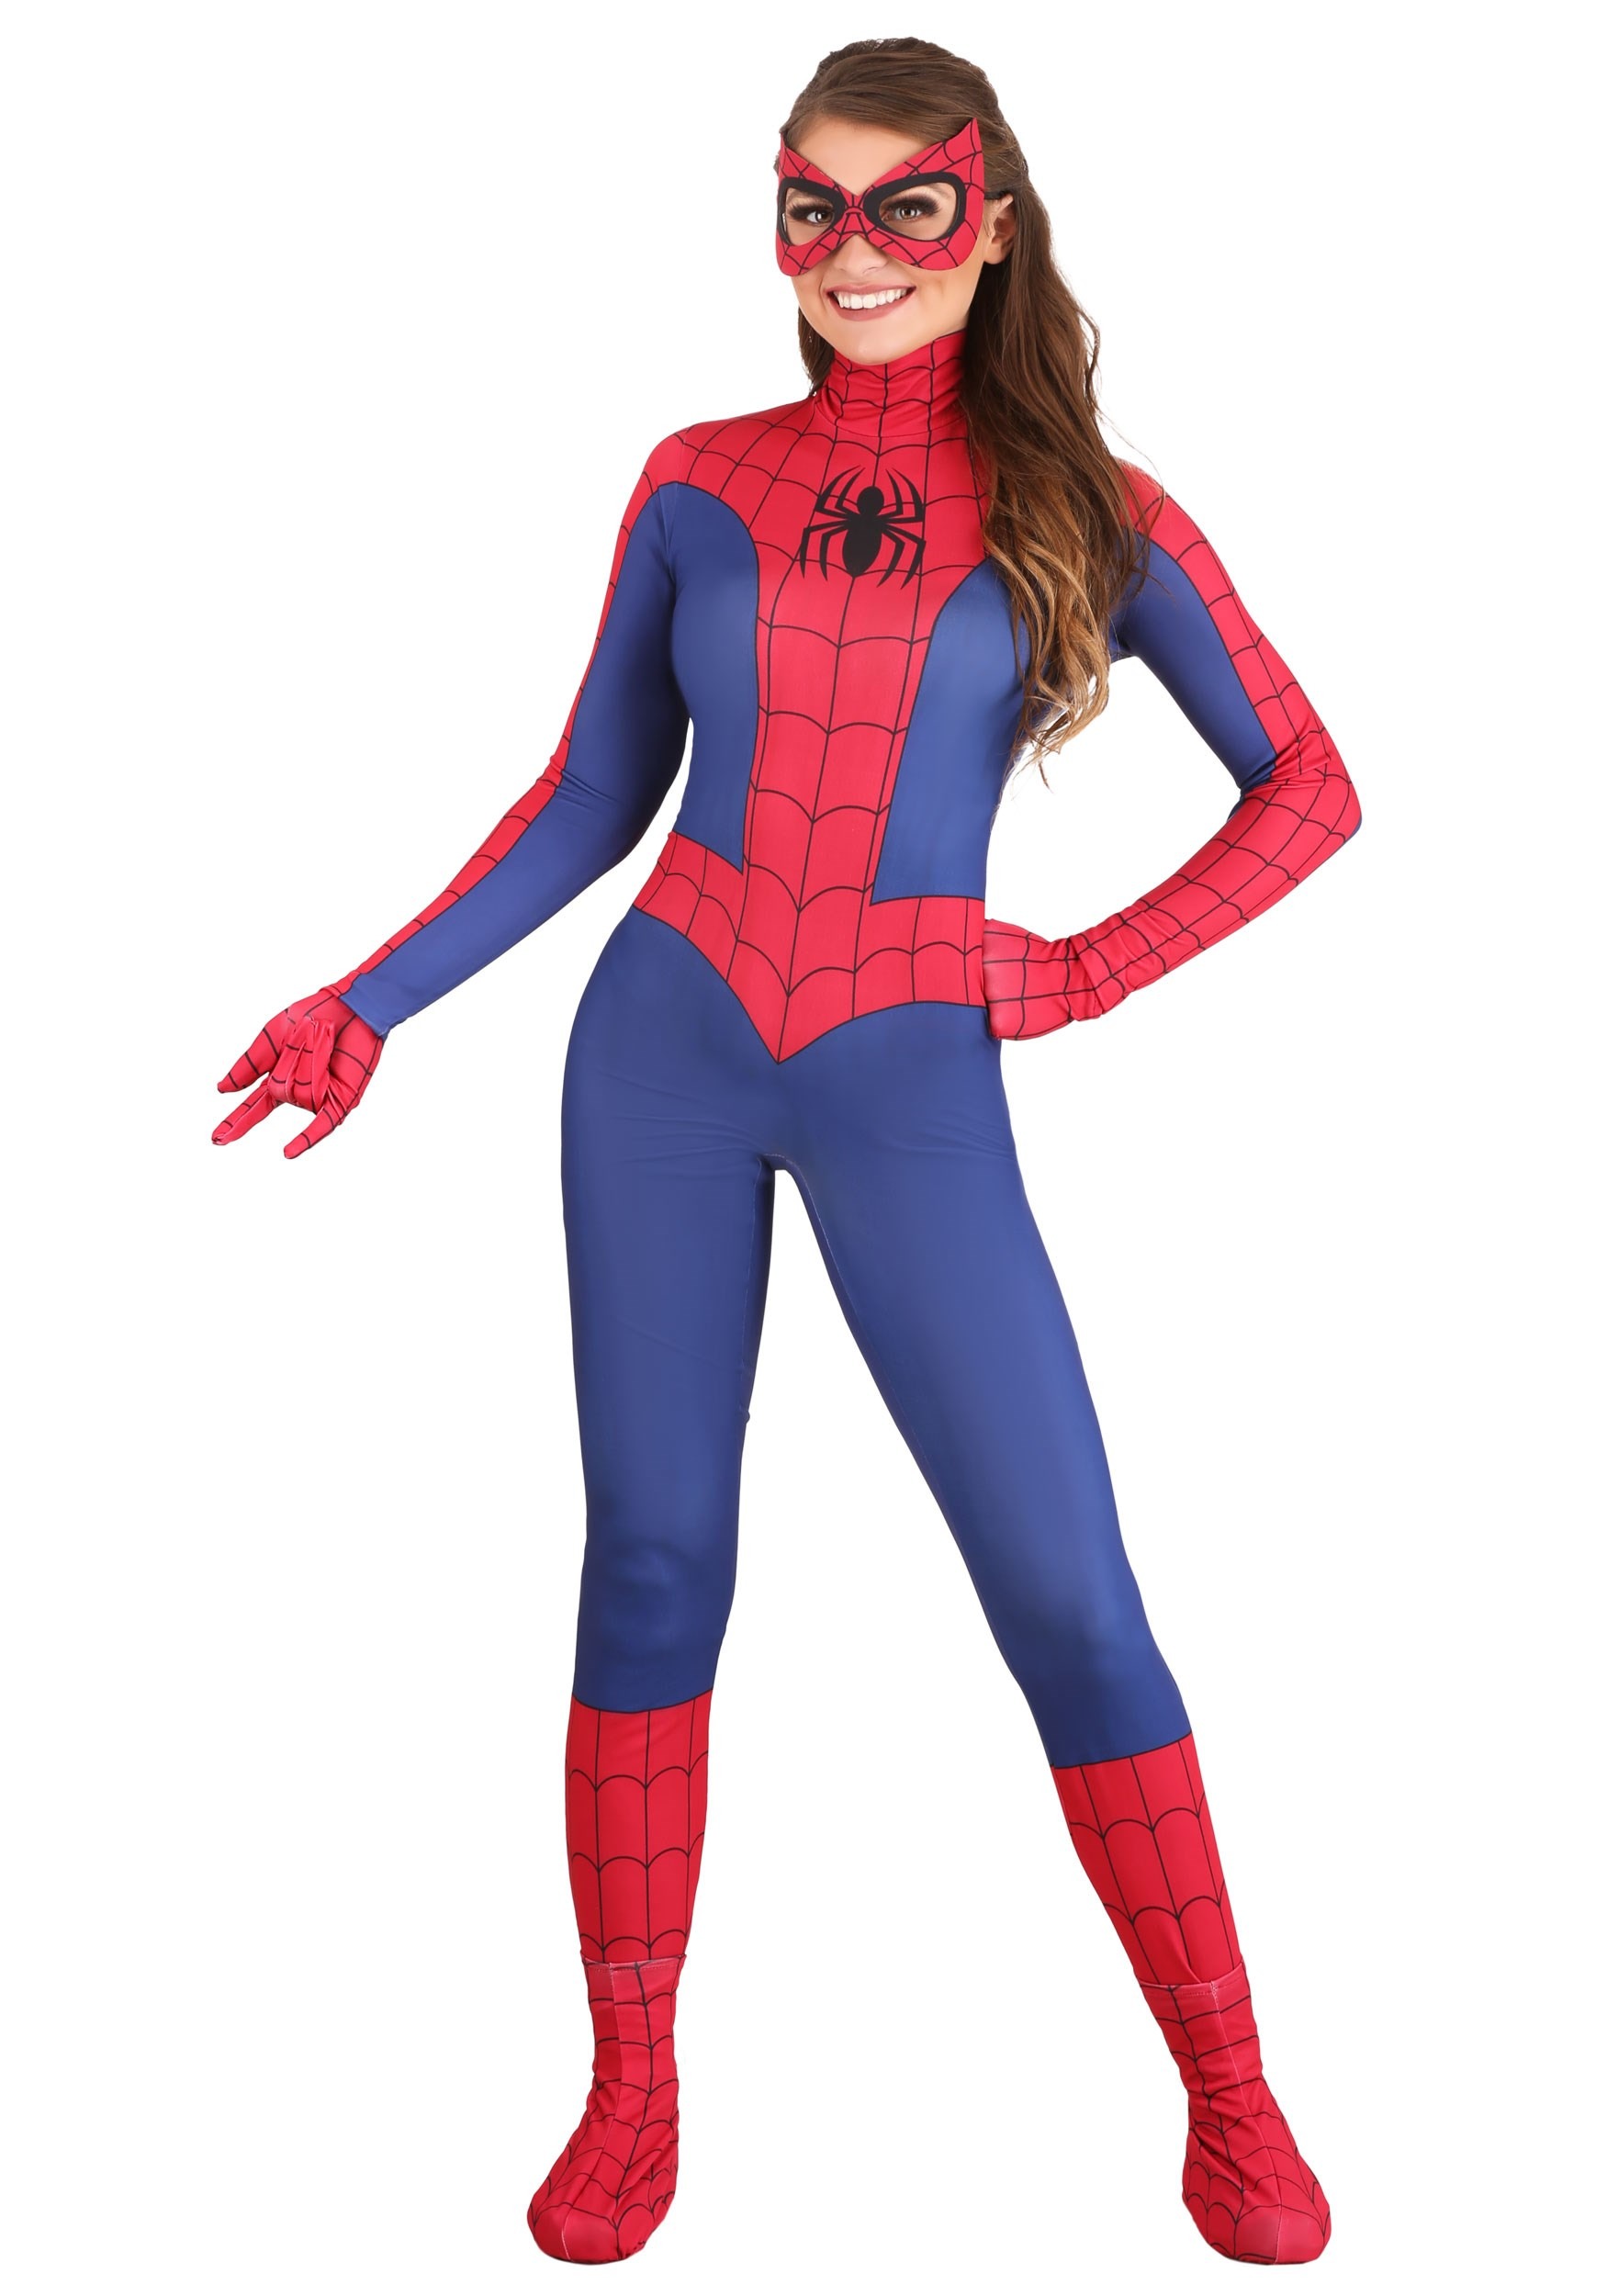 Spider-Man Costume for Women